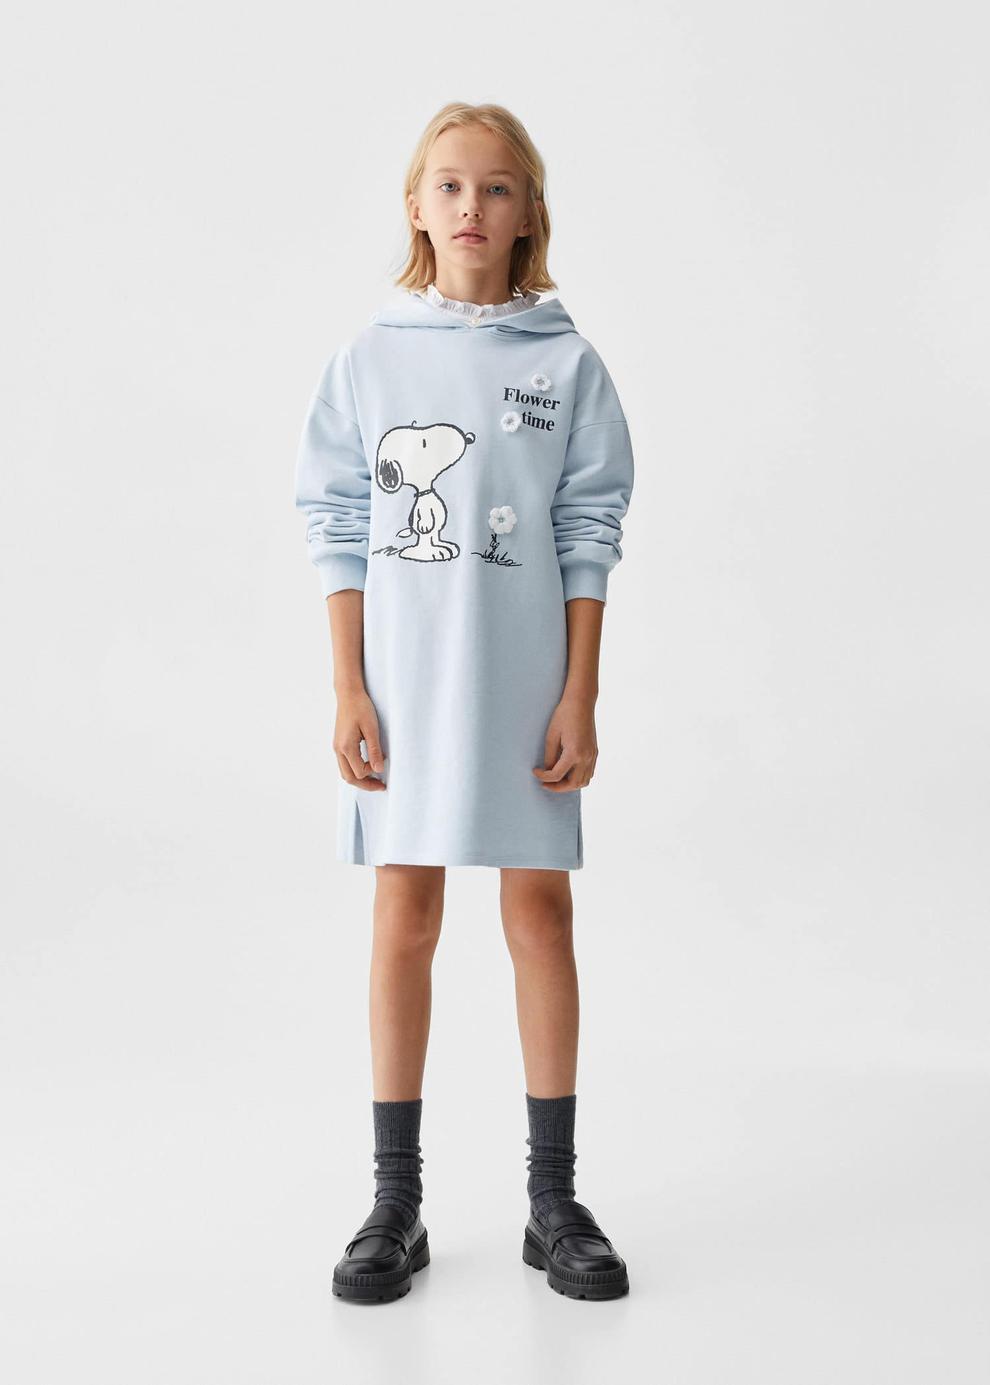 Snoopy sweatshirt dress offers at S$ 59.9 in Mango Kids